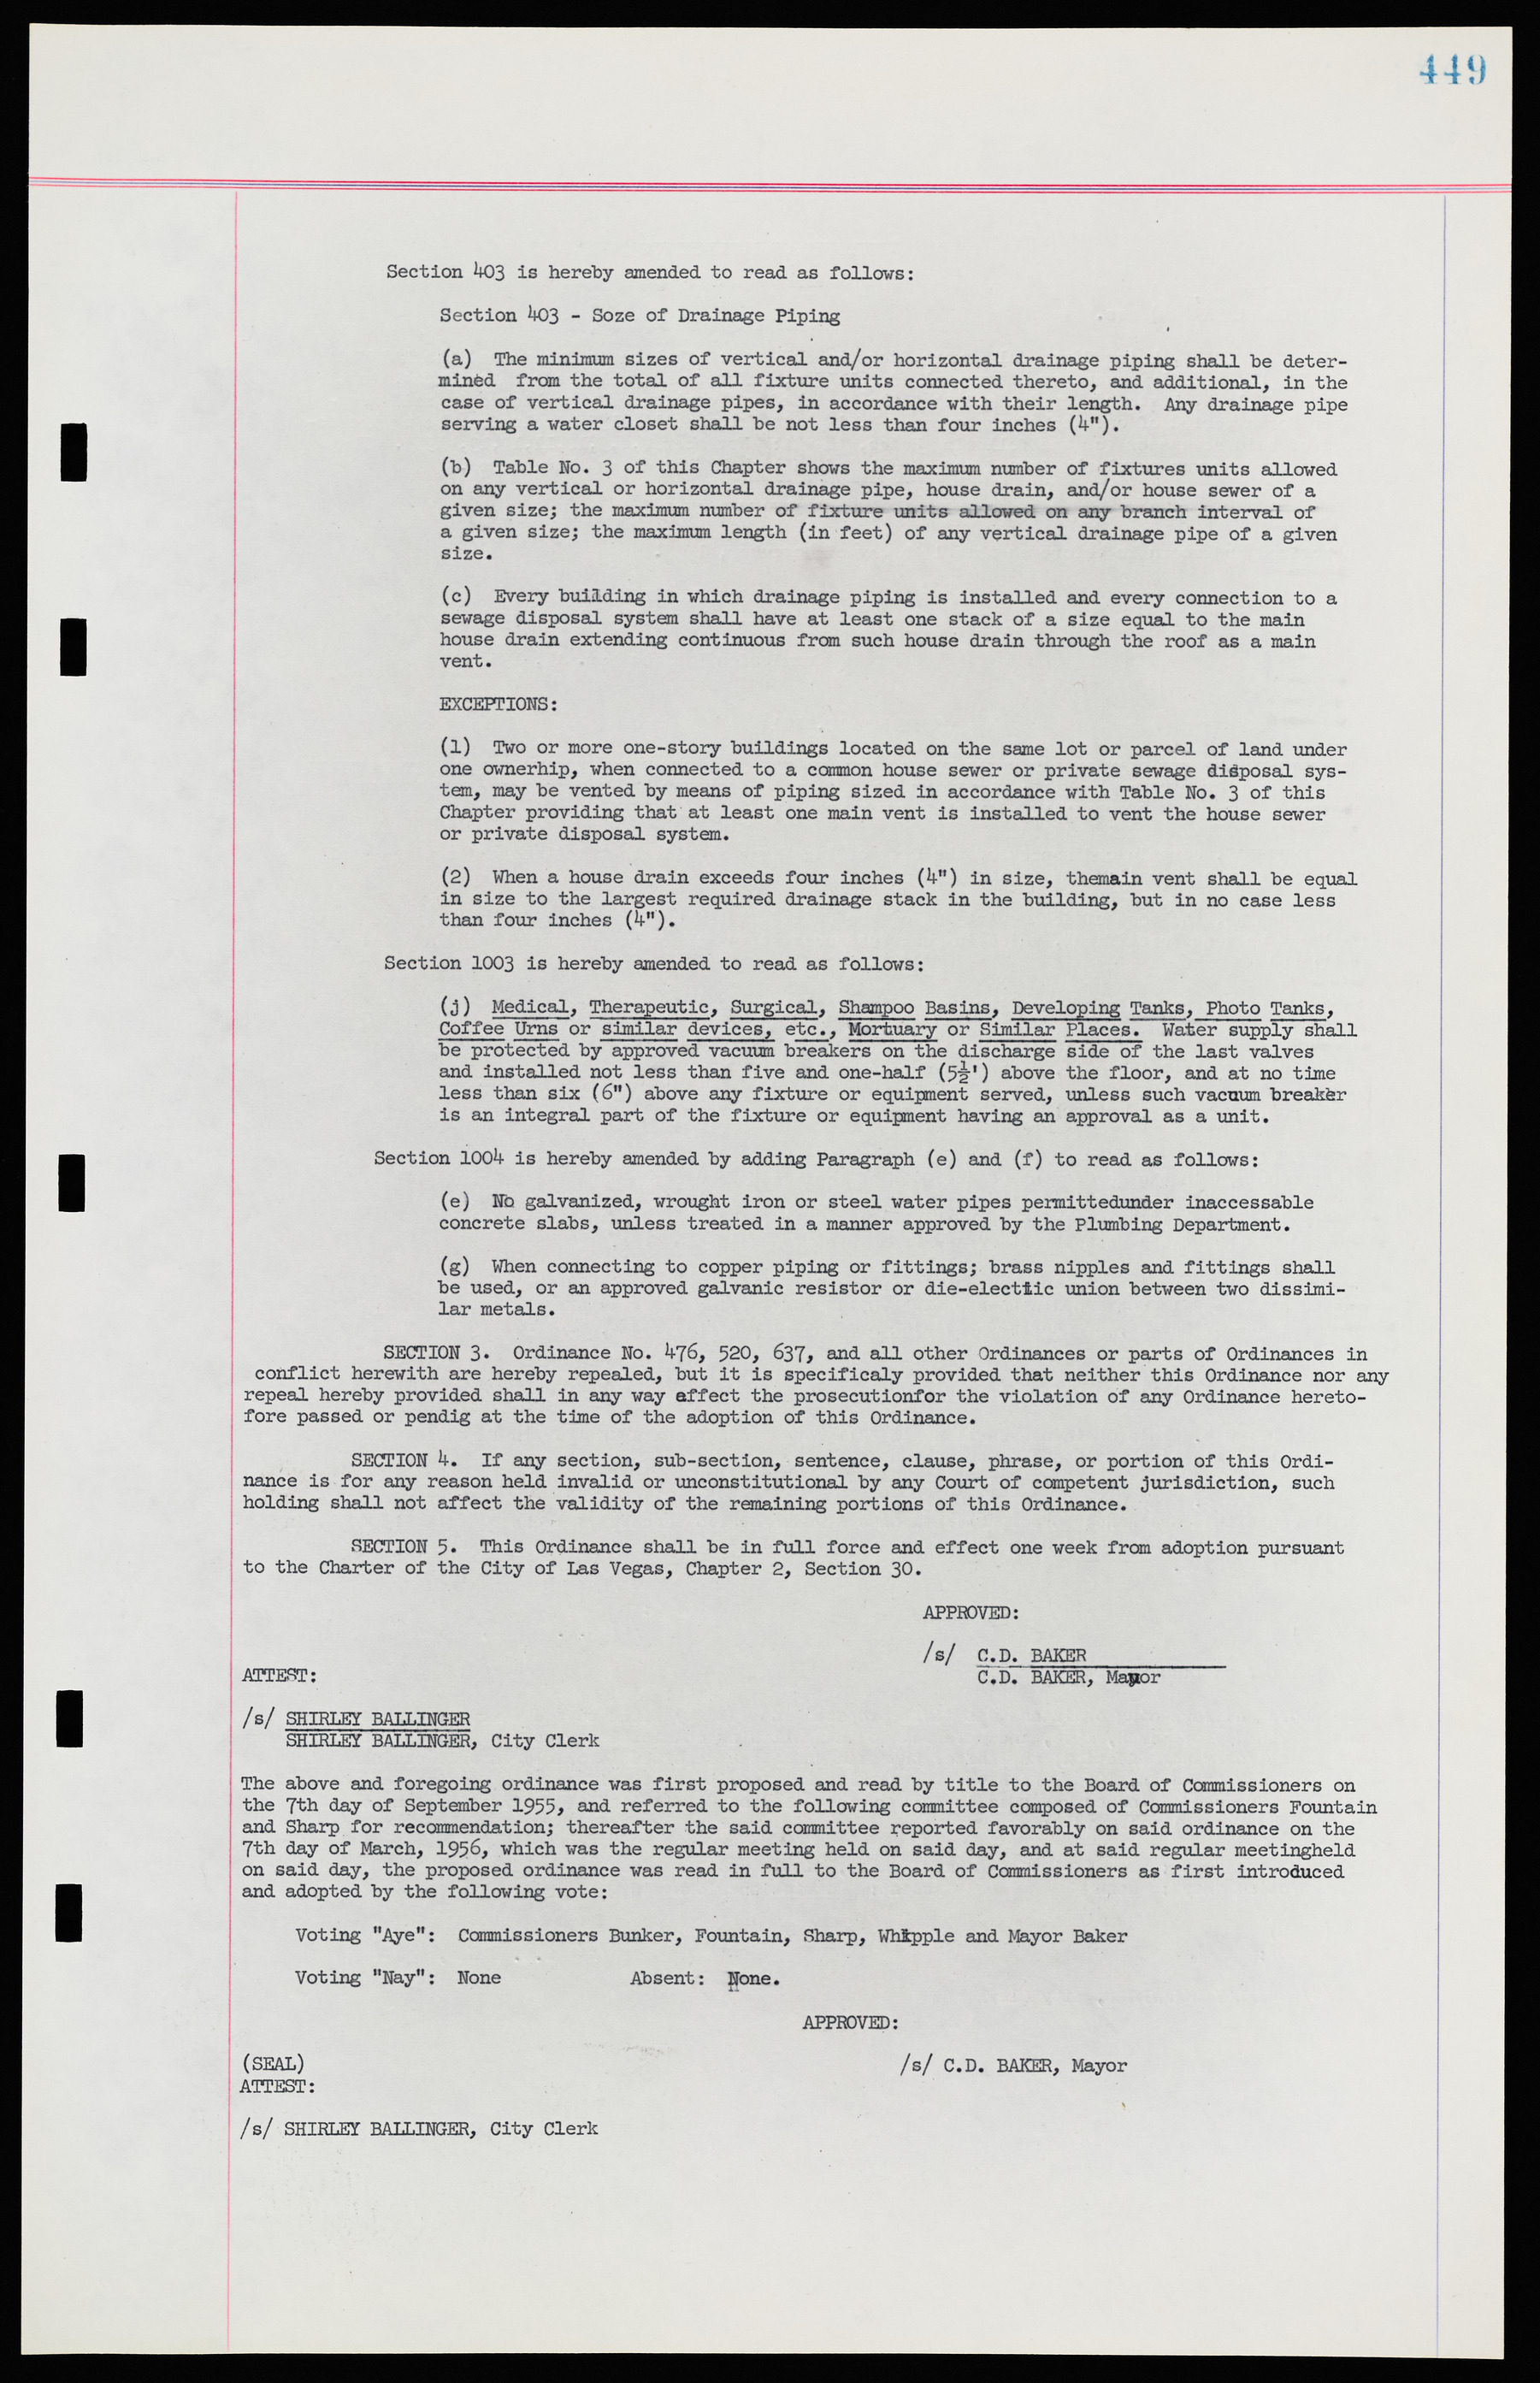 Las Vegas City Ordinances, November 13, 1950 to August 6, 1958, lvc000015-457